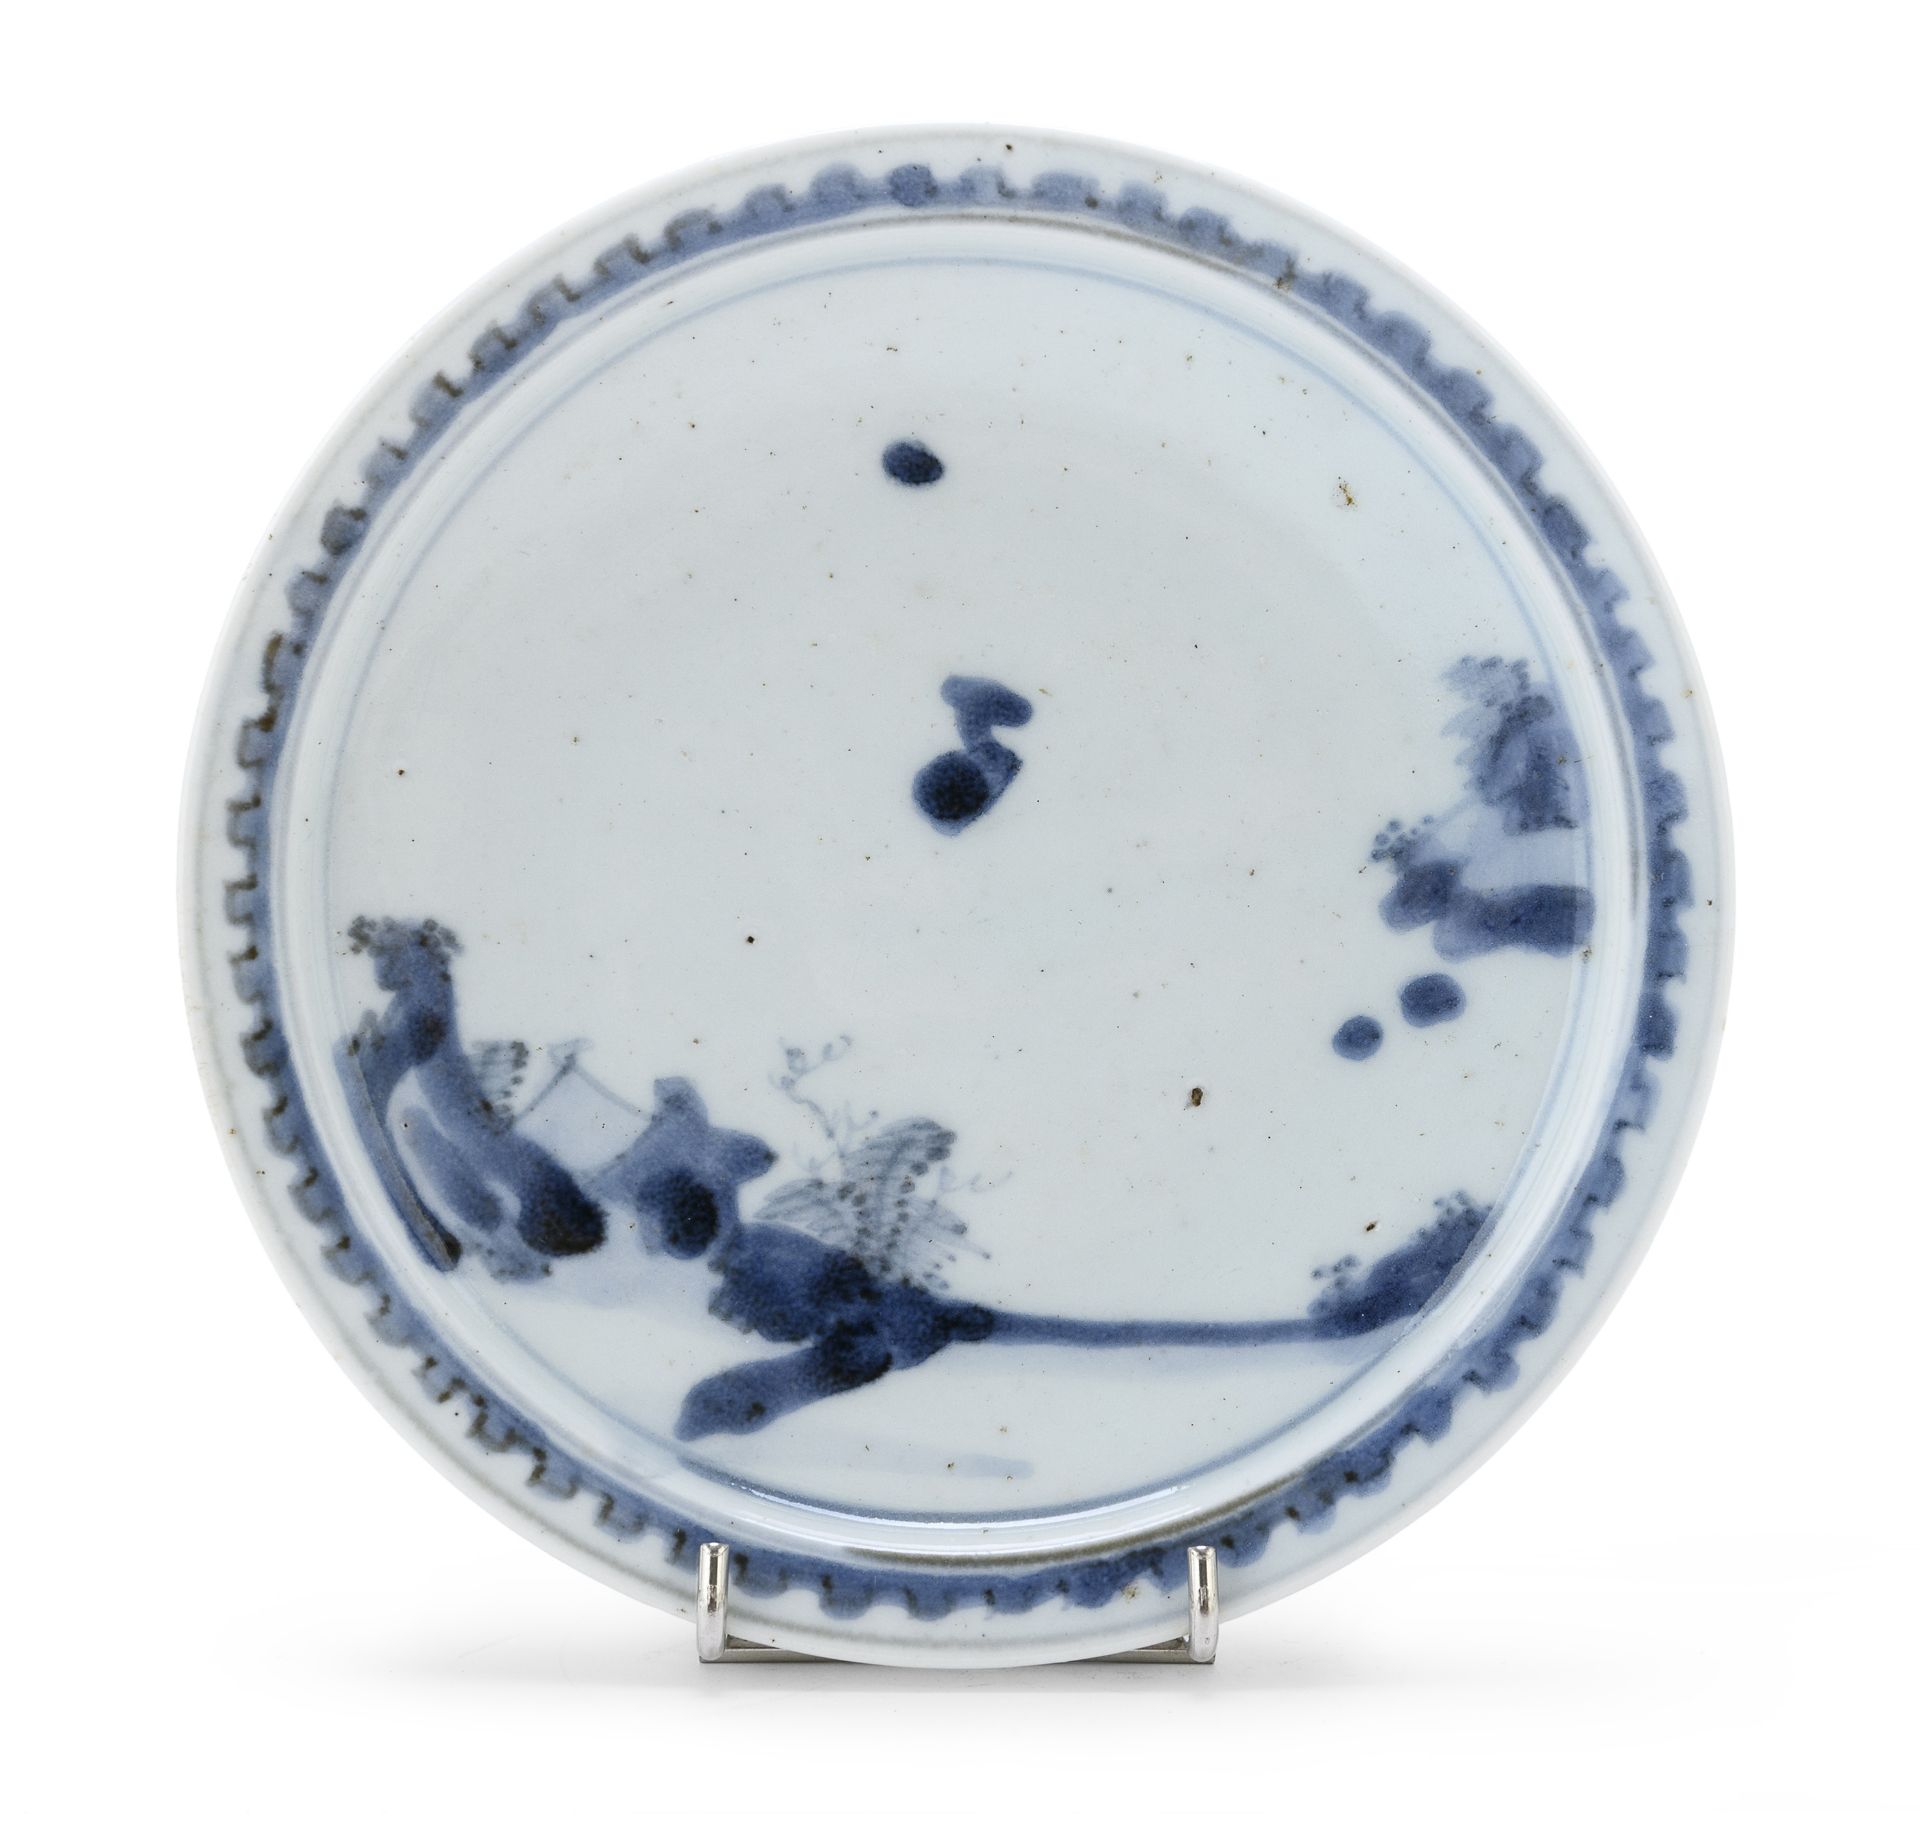 RARE BLUE AND WHITE PORCELAIN DISH SHOKI IMARI JAPAN 1630/1640